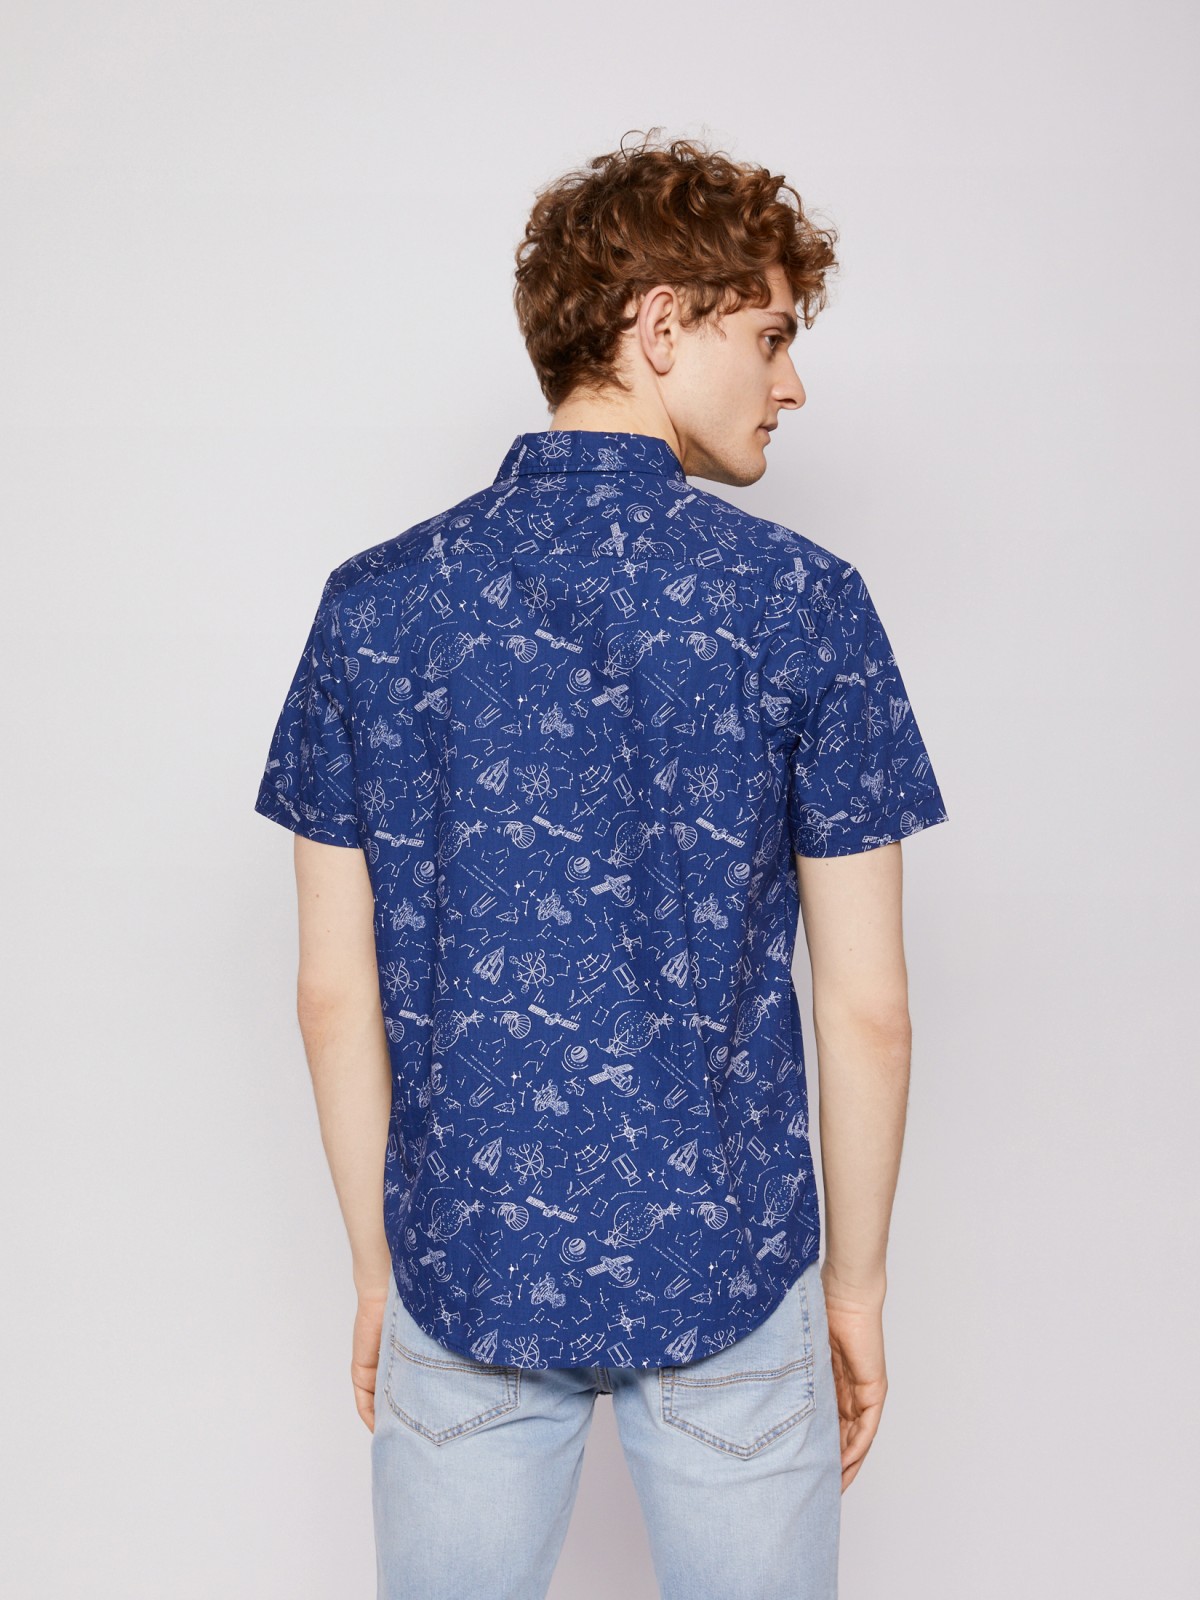 Хлопковая рубашка с короткими рукавами zolla 211232259031, цвет темно-синий, размер M - фото 3